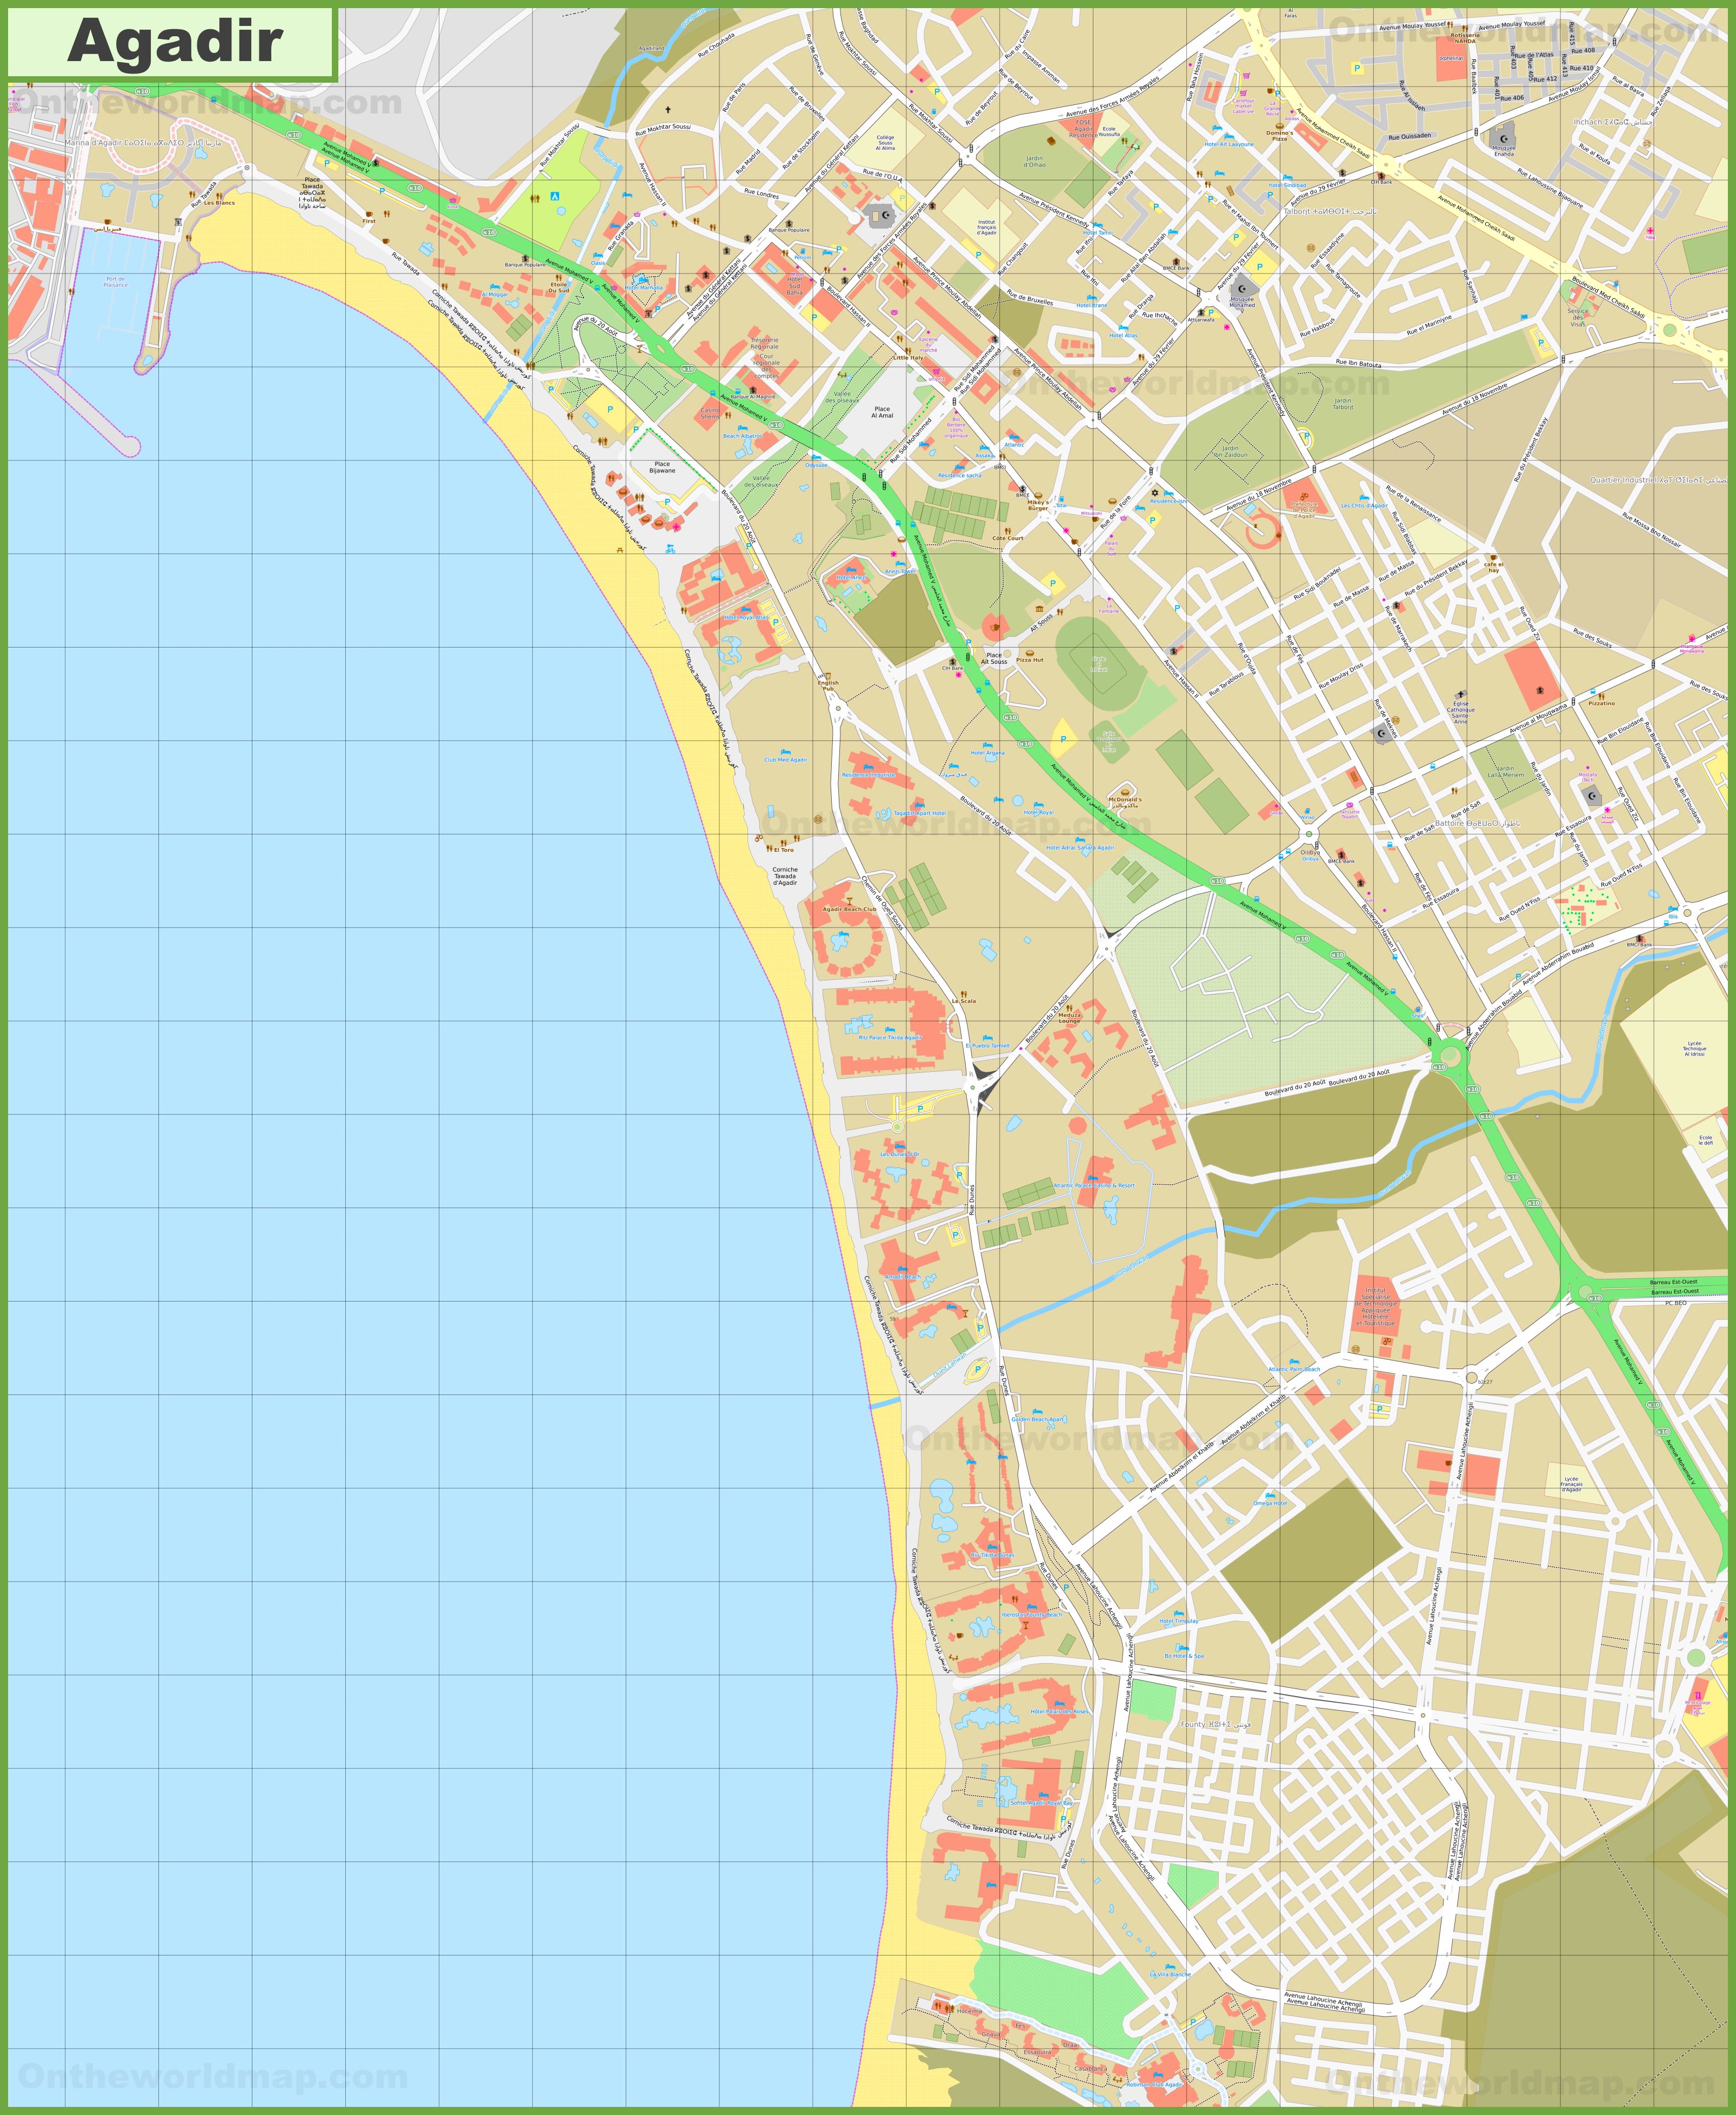 detailed-map-of-agadir.jpg